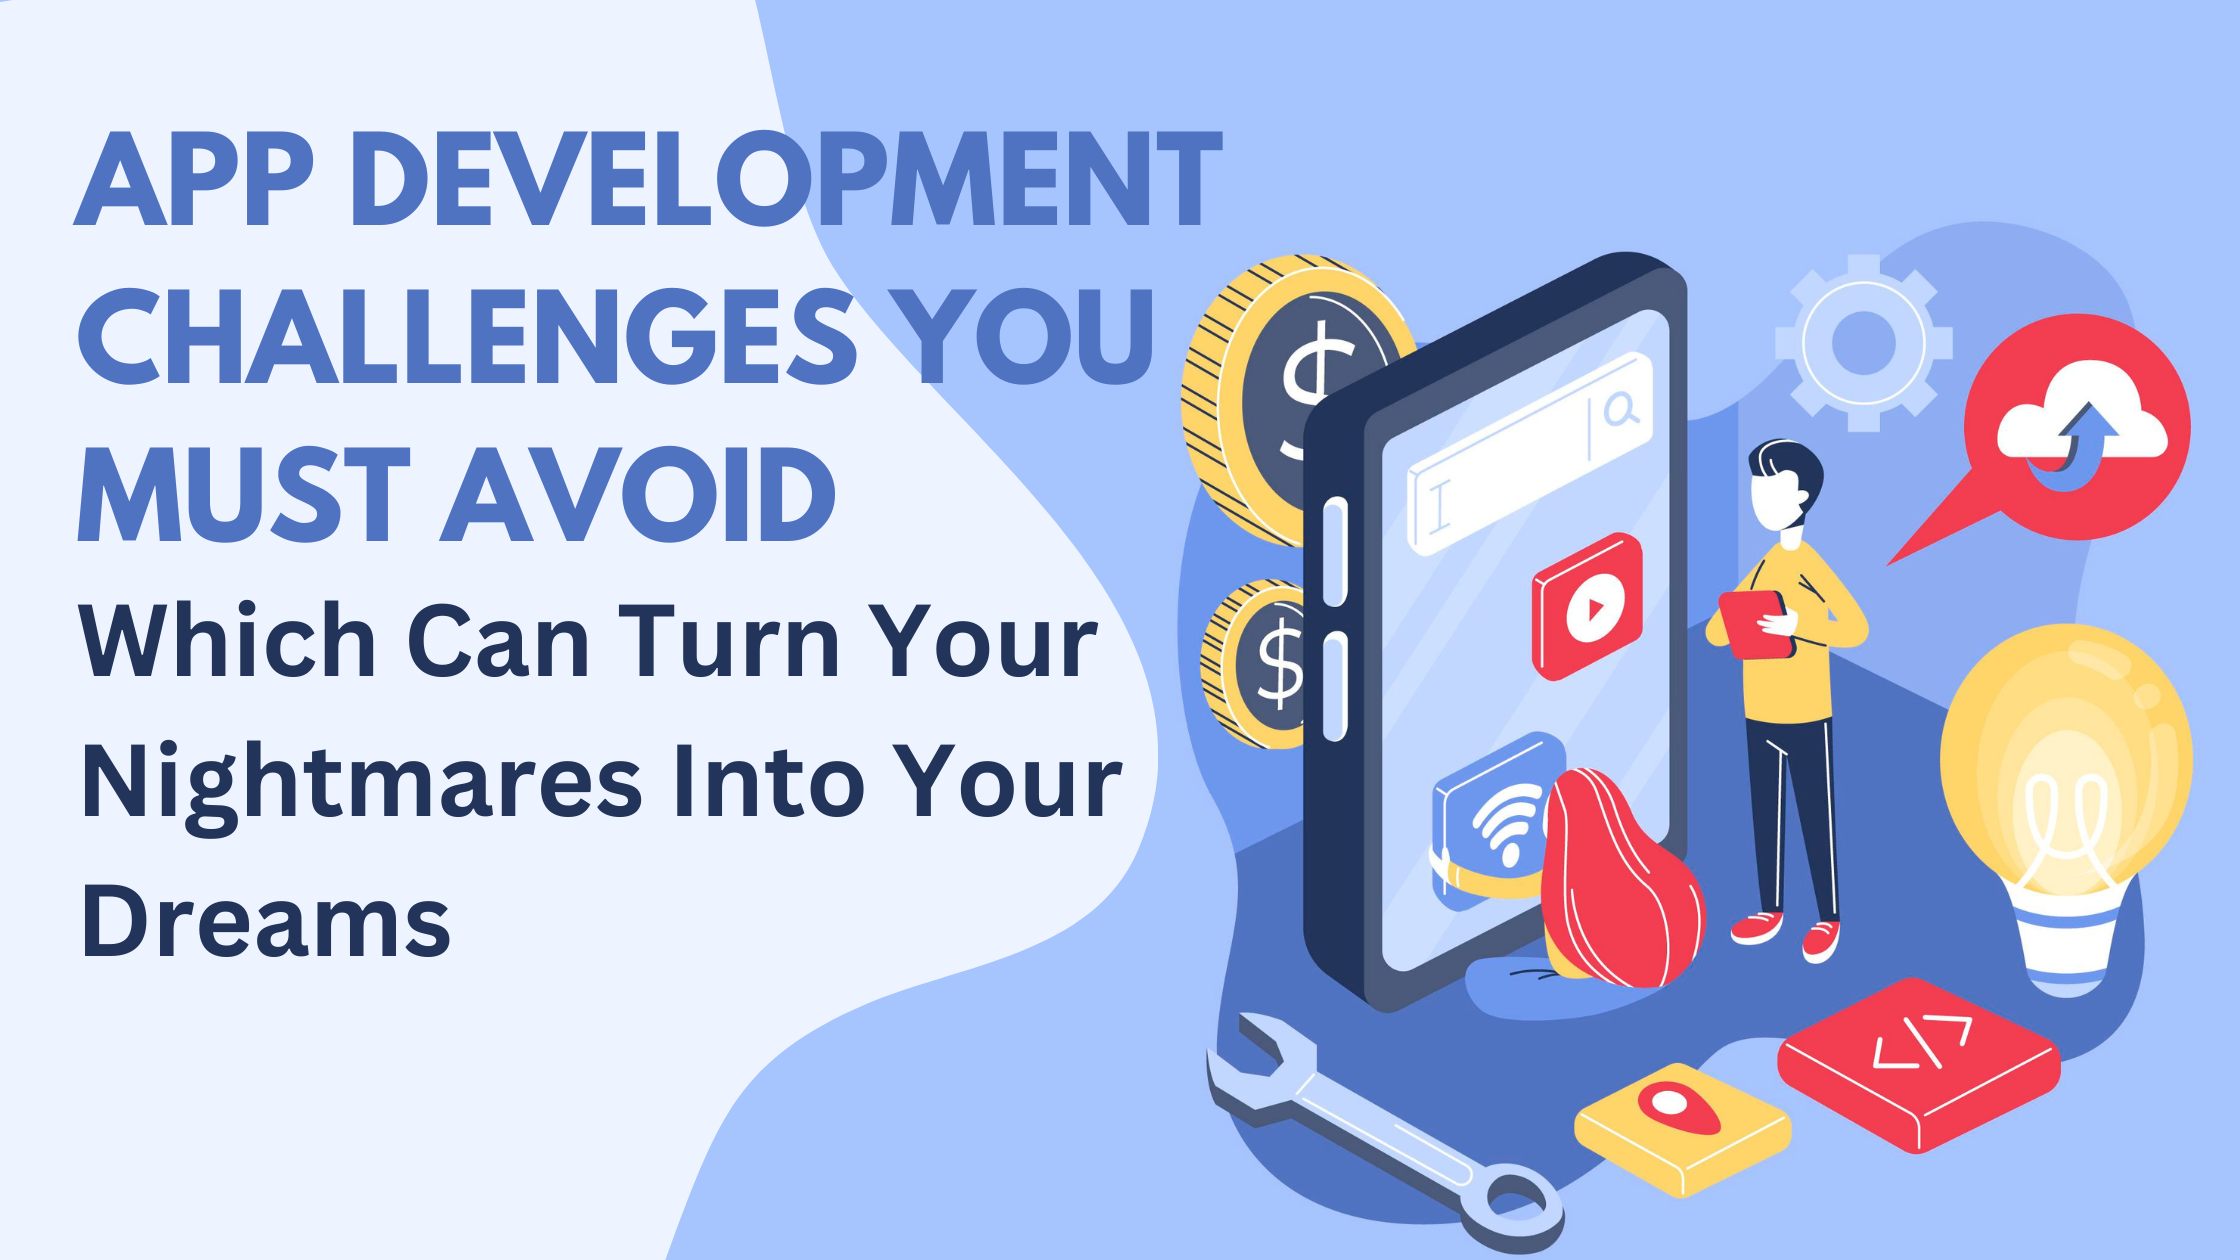 App development challenges